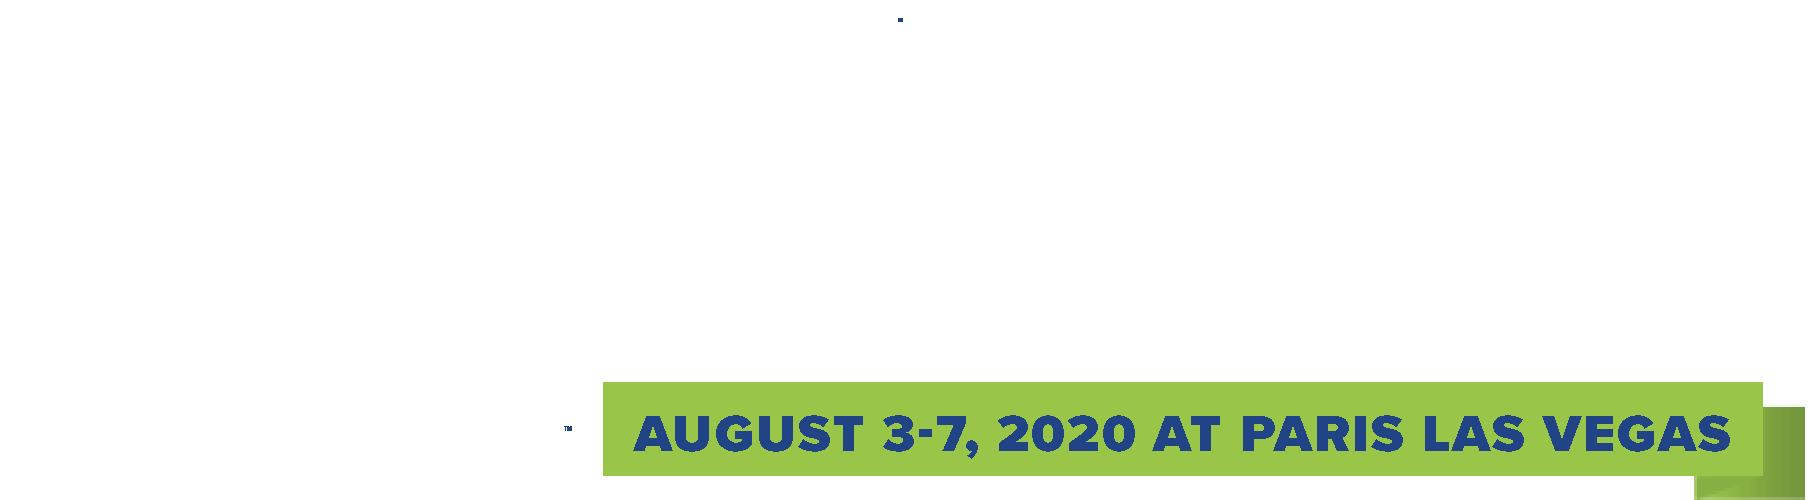 Home Health Coding Summit | Aug 3-7, 2020 | Paris Las Vegas